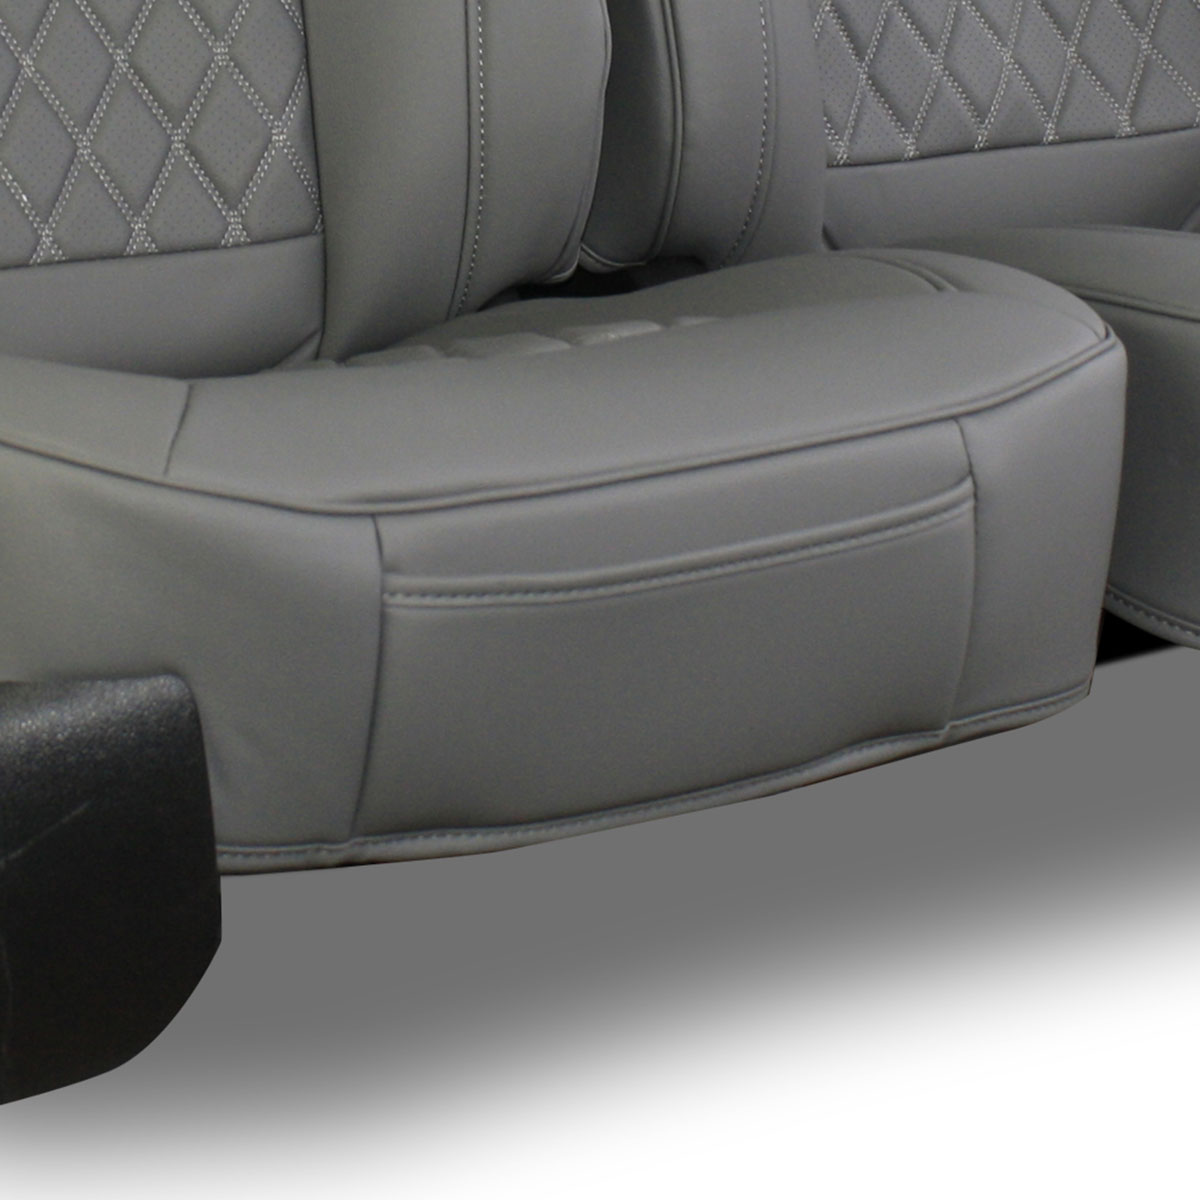 Neoprene Diamond Seat Covers (Pair, Includes Headrest Covers)